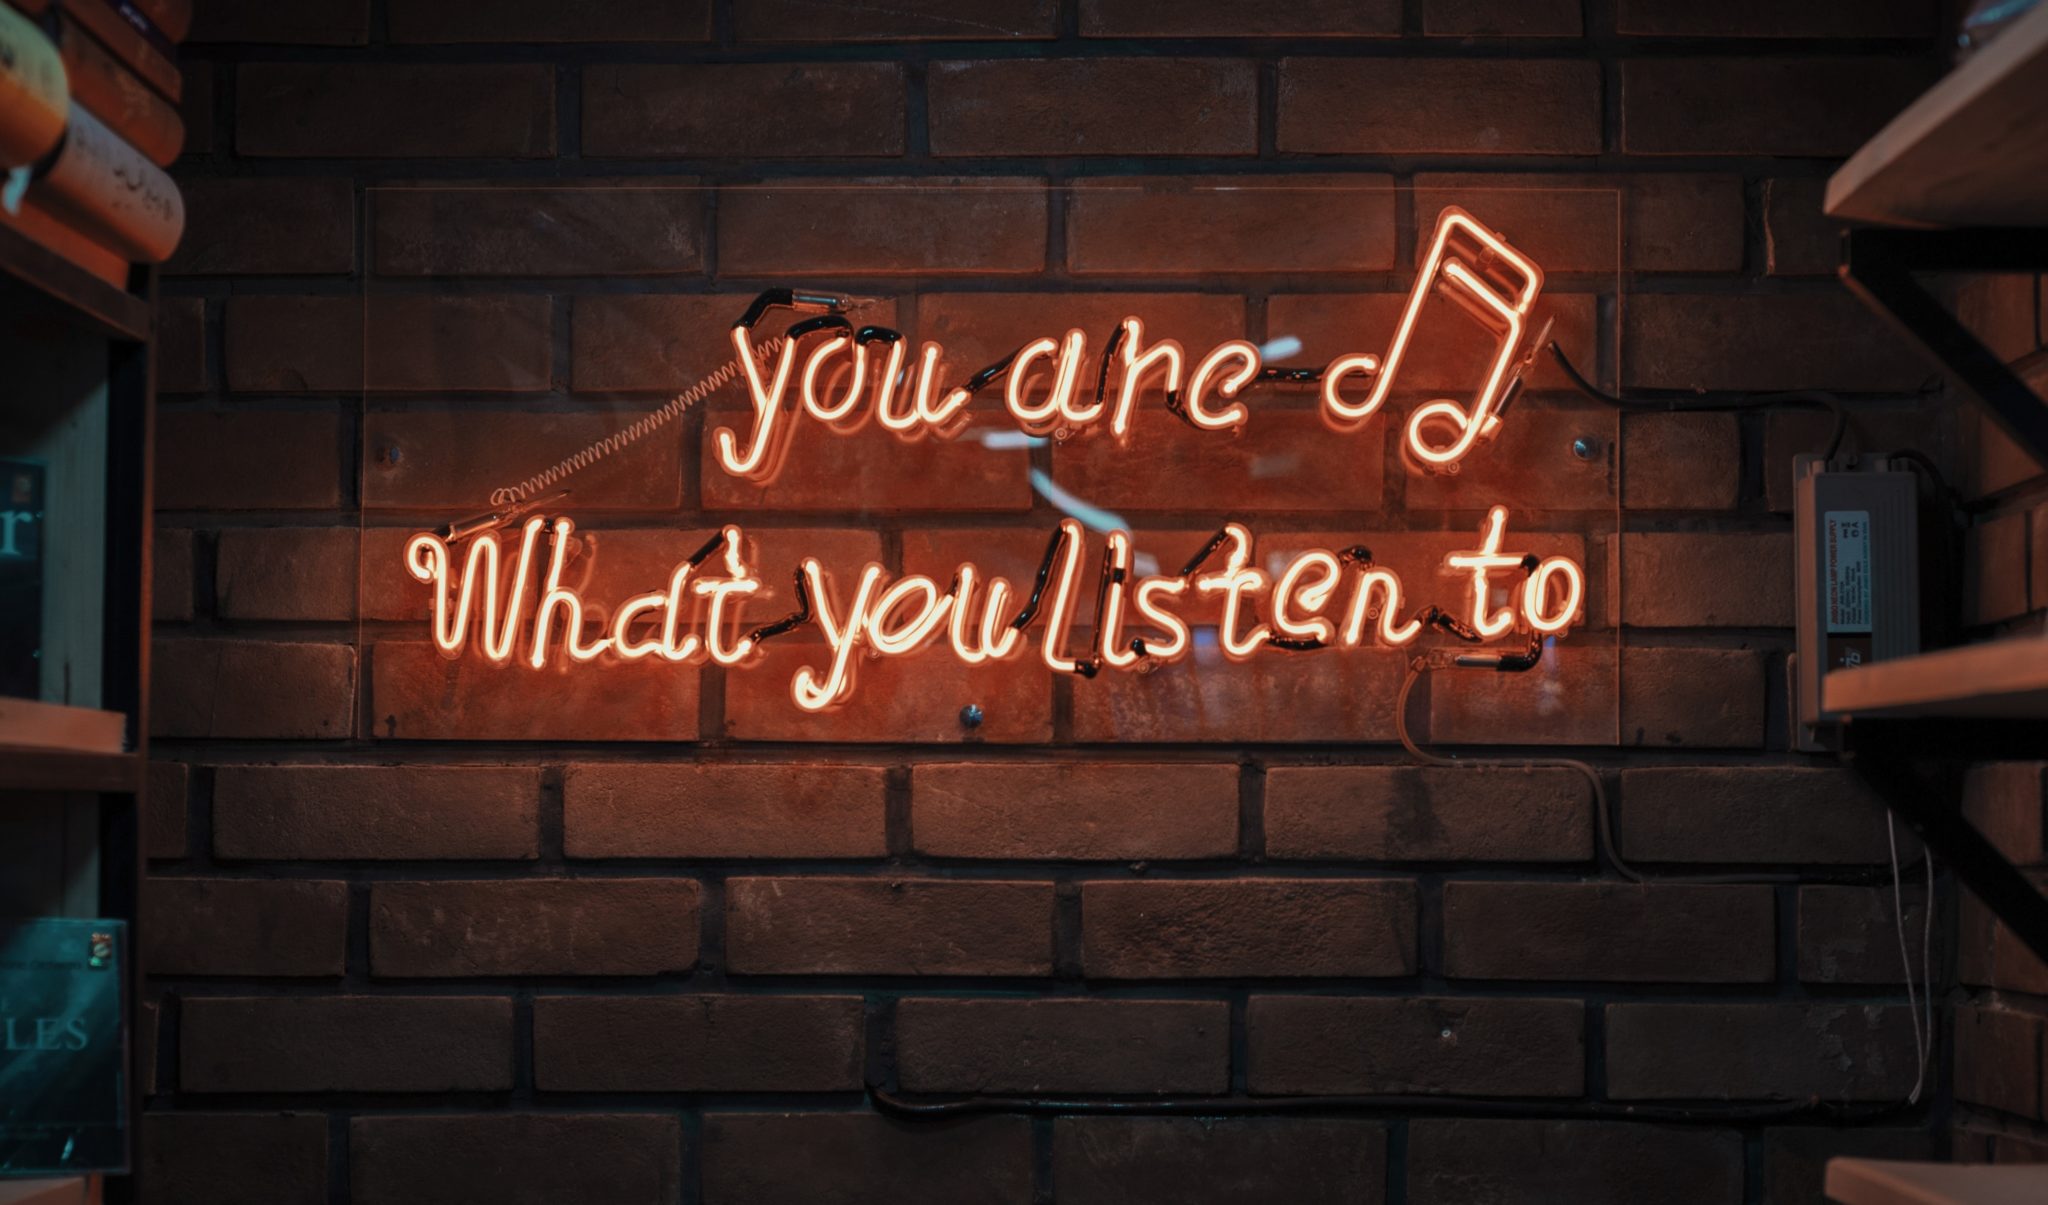 ceglana ściana, a na niej neon z napisem "you are what you listen to"